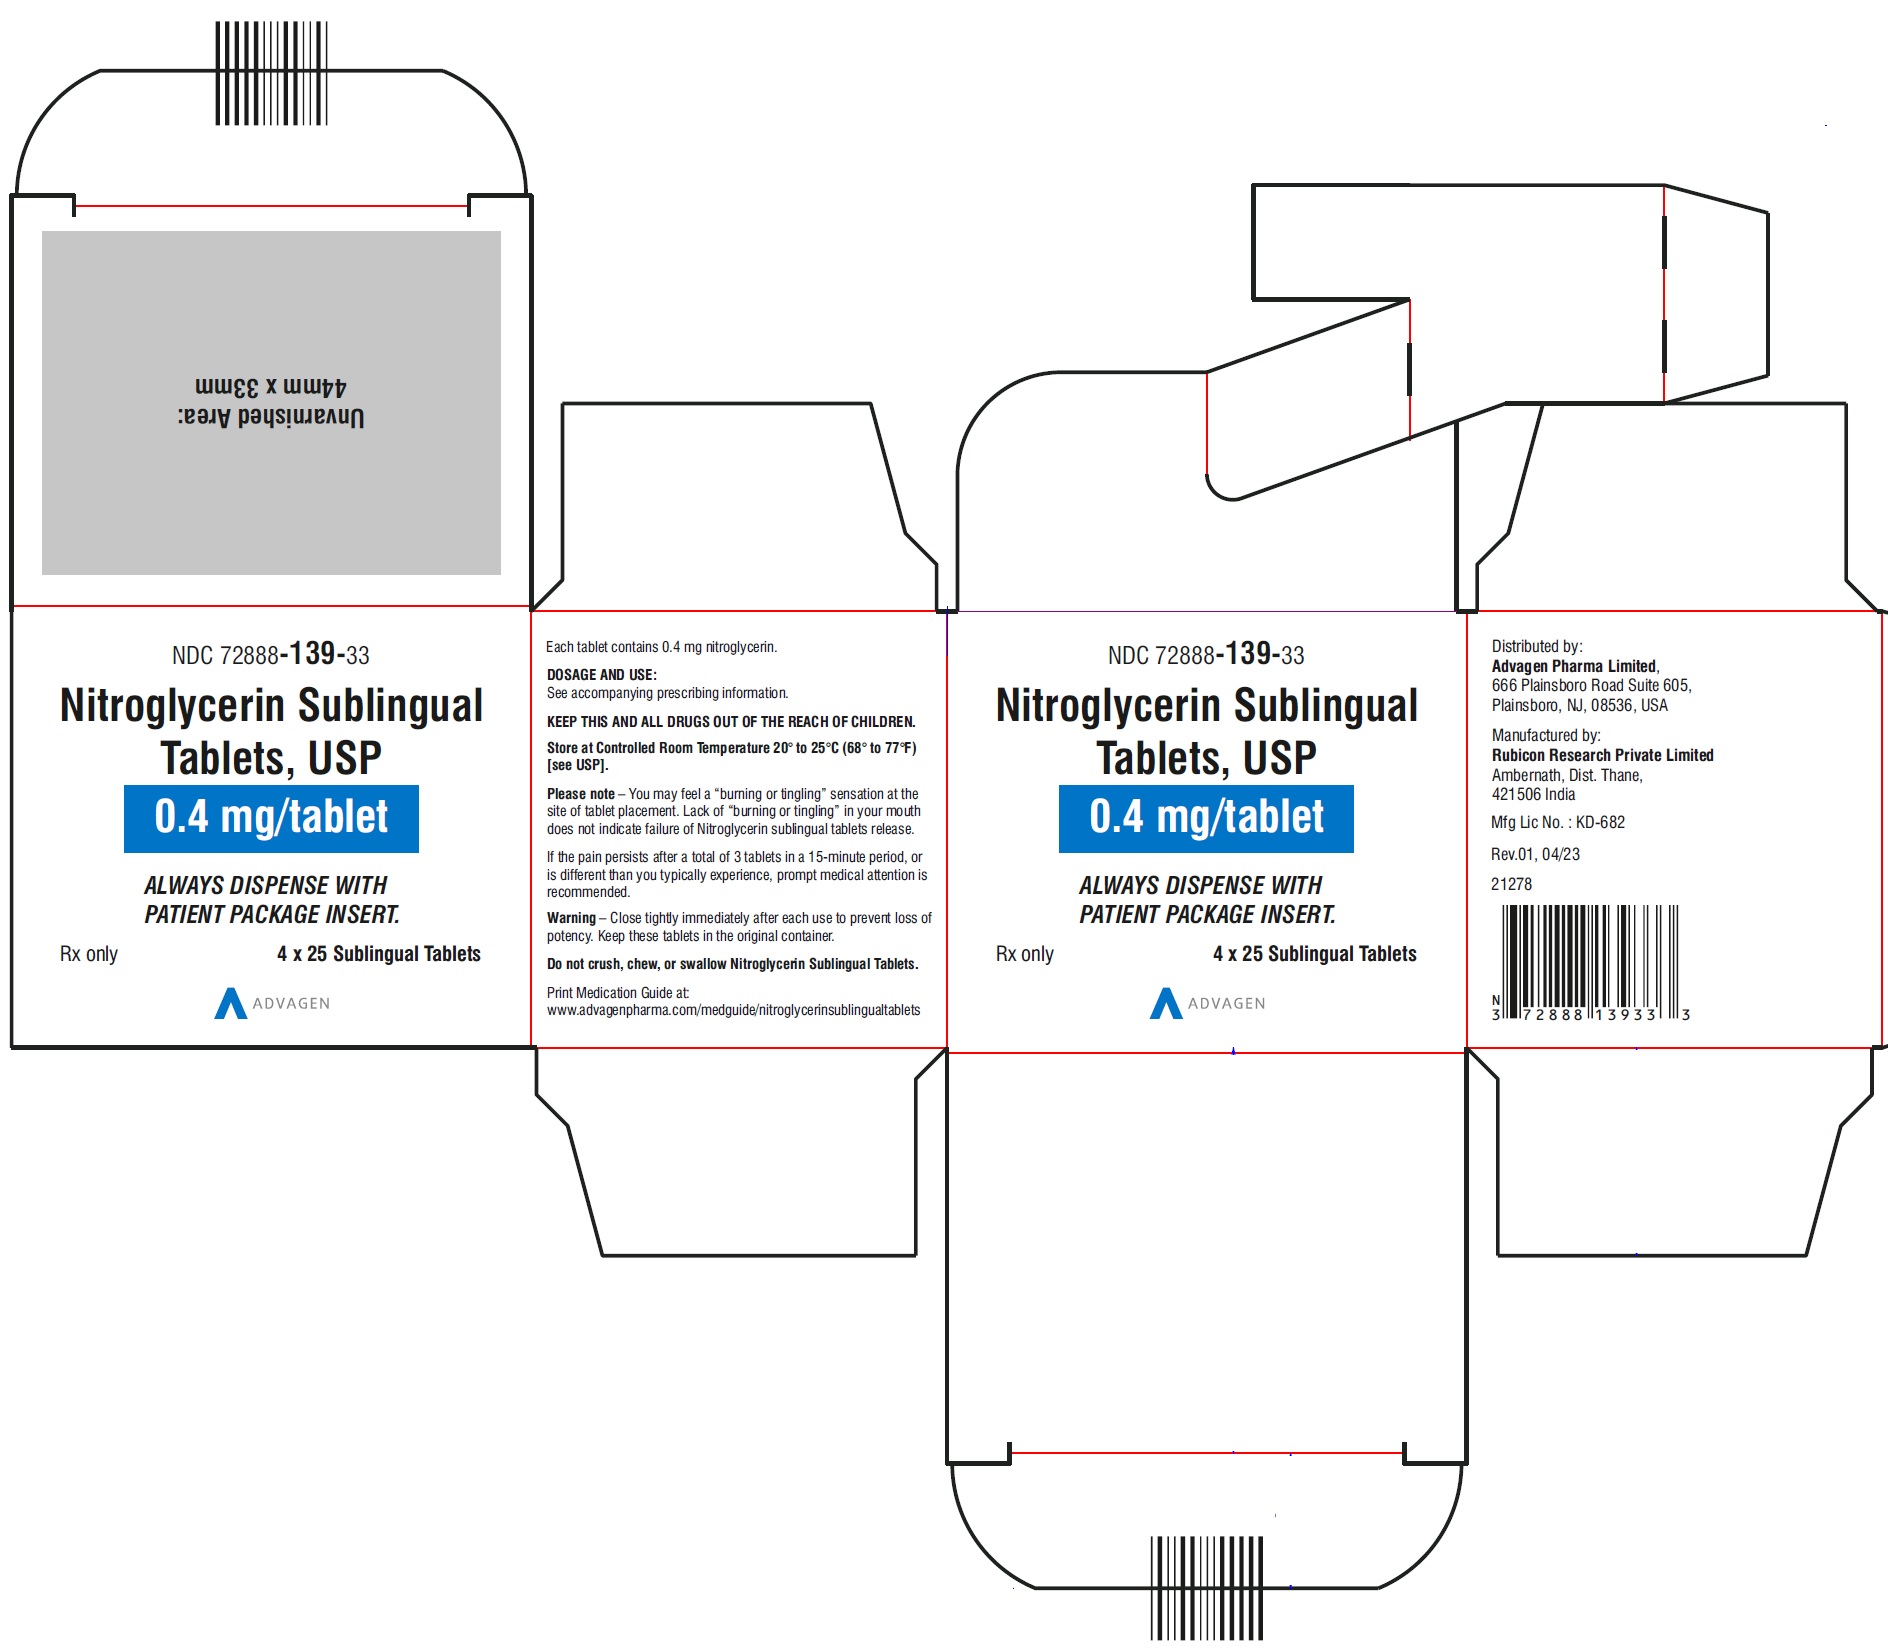 Nitroglycerin Sublingual Tablets, USP 0.4 mg - NDC 72888-139-01  - Carton Label